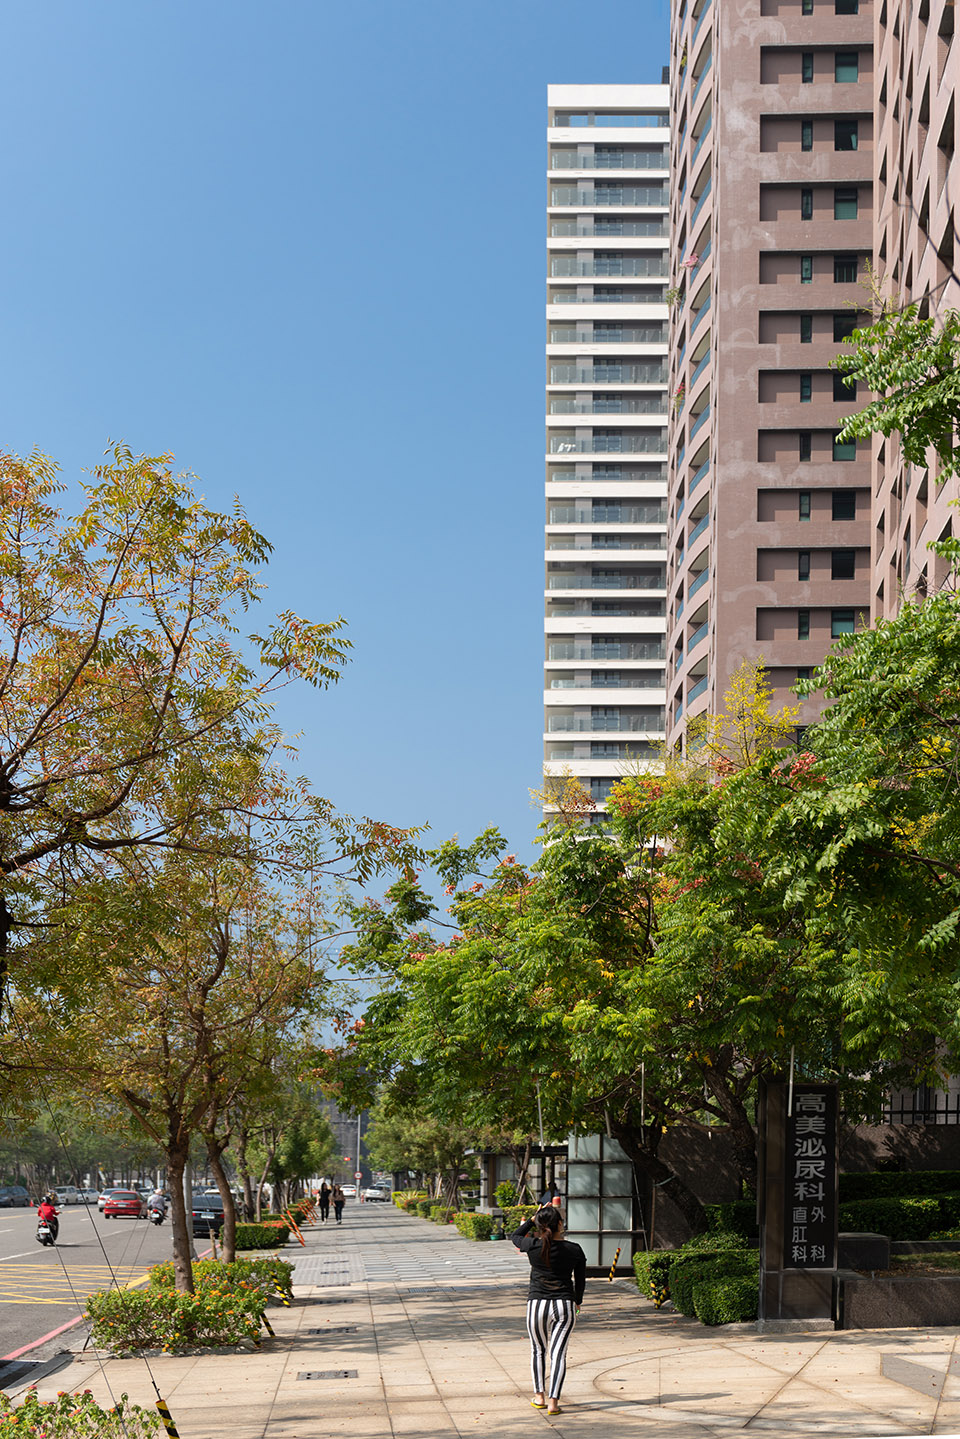 One More住宅楼，台湾/城市环境中的自然生活-48